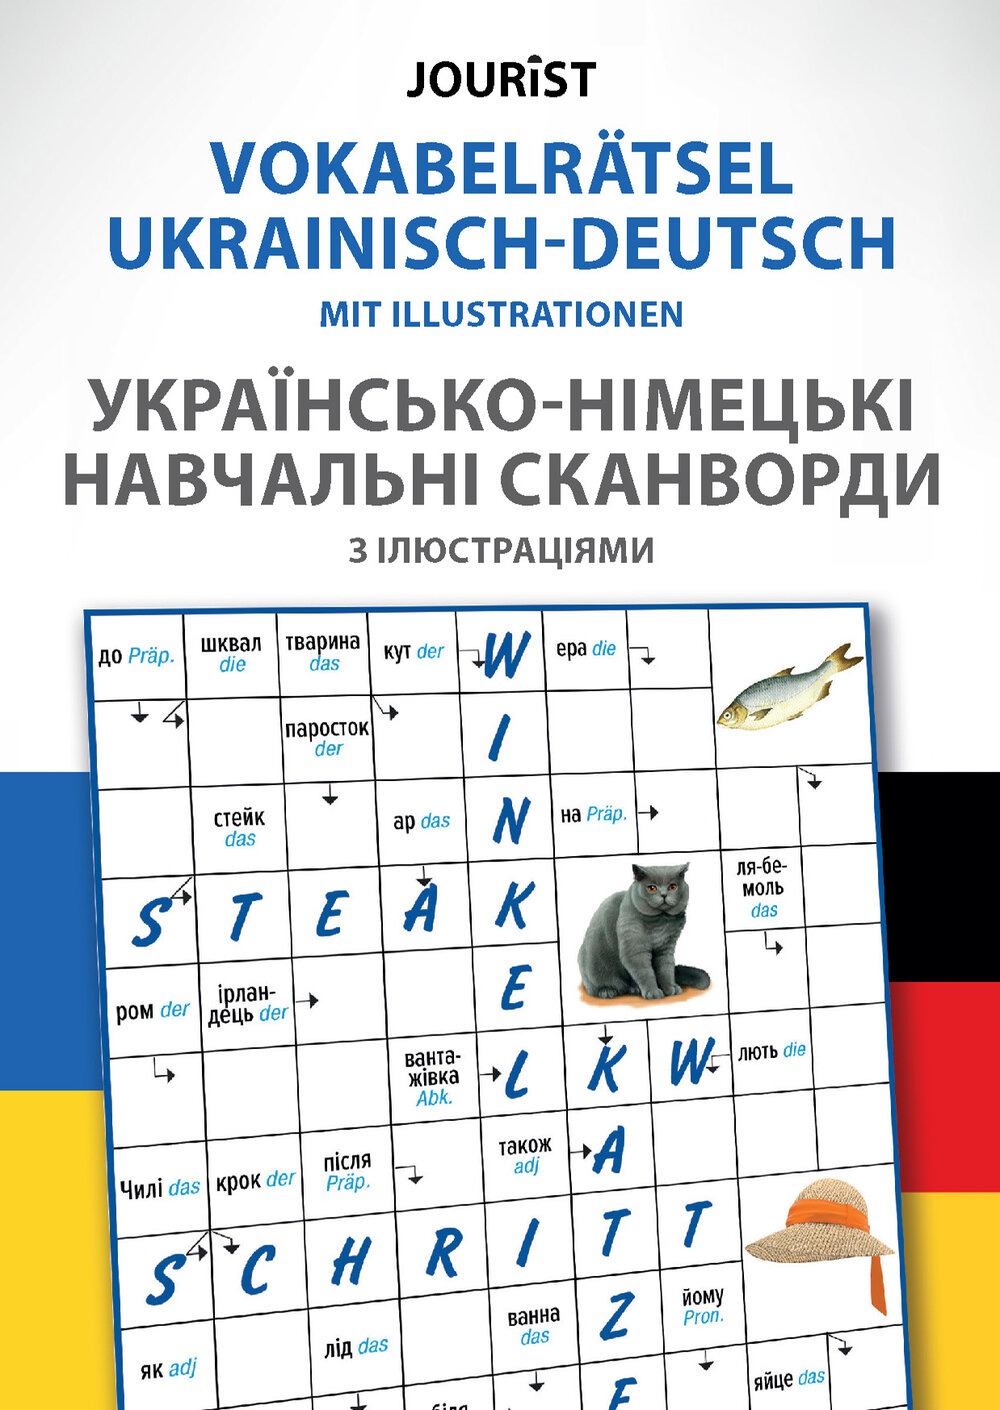 Vokabelrätsel Ukrainisch-Deutsch mit Illustrationen / Українсько-німецькі навчальні сканворди з ілюстраціями